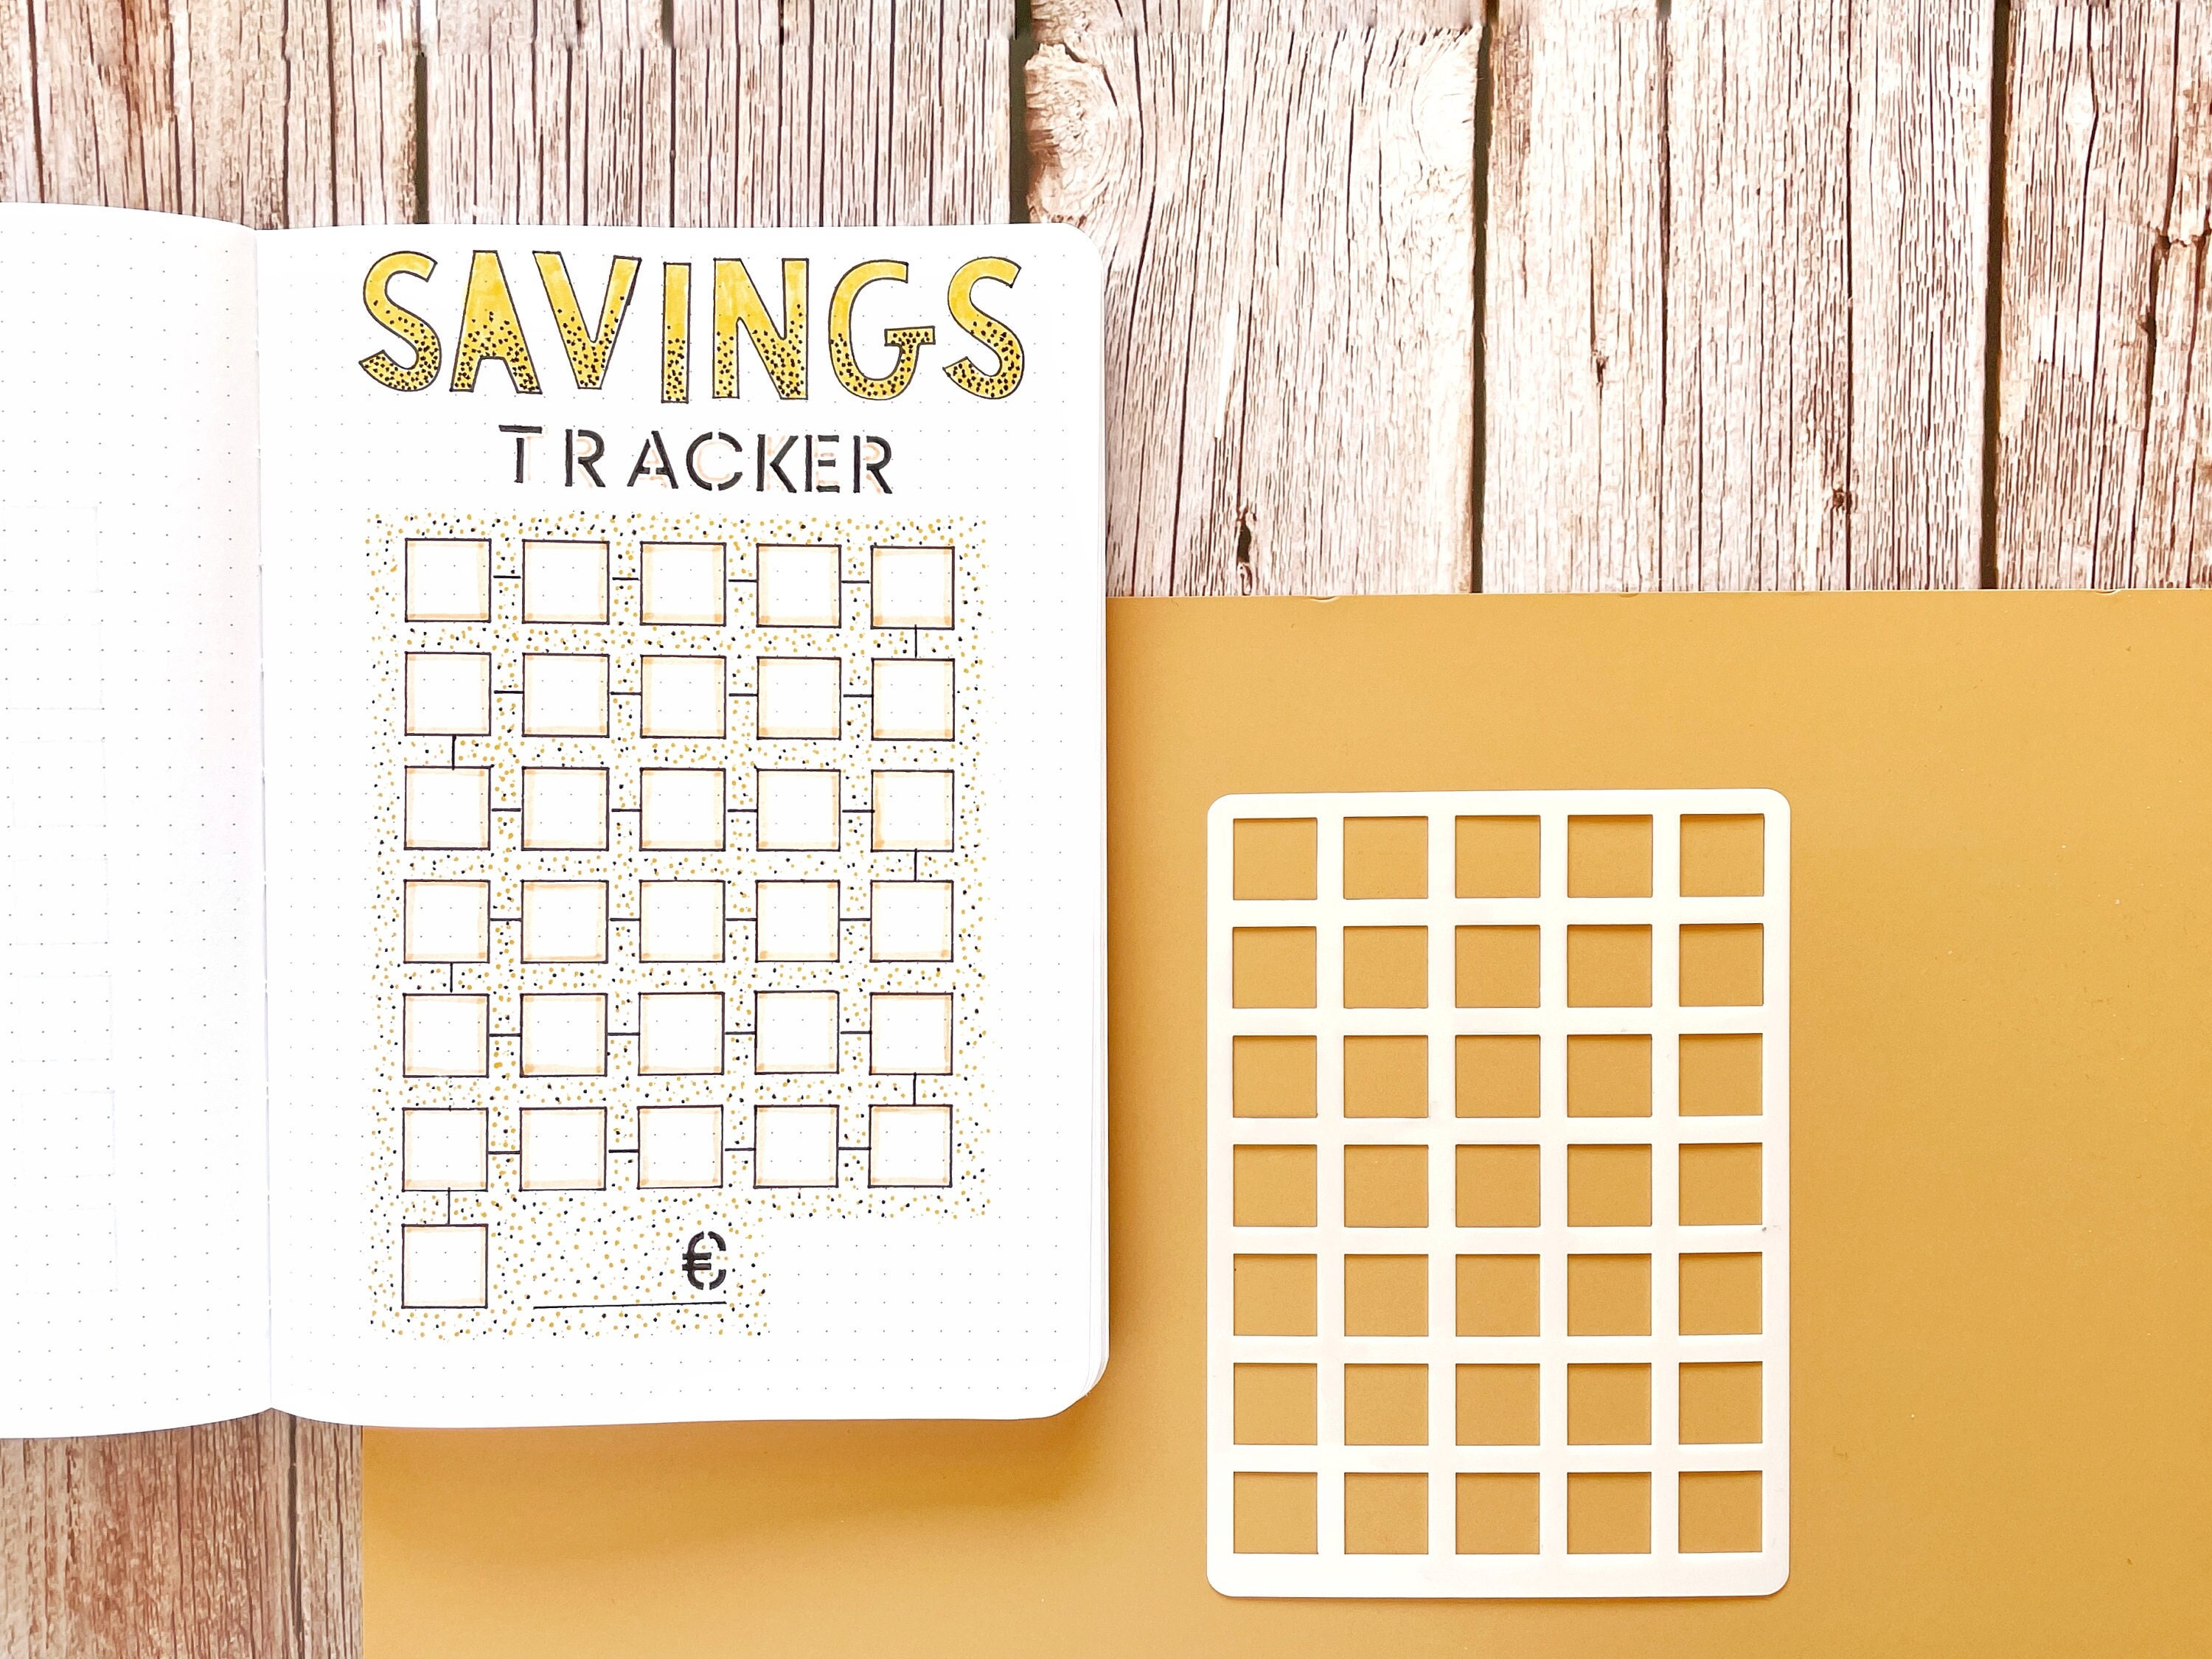 Savings Vs. Shopping Tracker Template Free Bullet Journal Layout Printable  - Bullet Journal Junkie